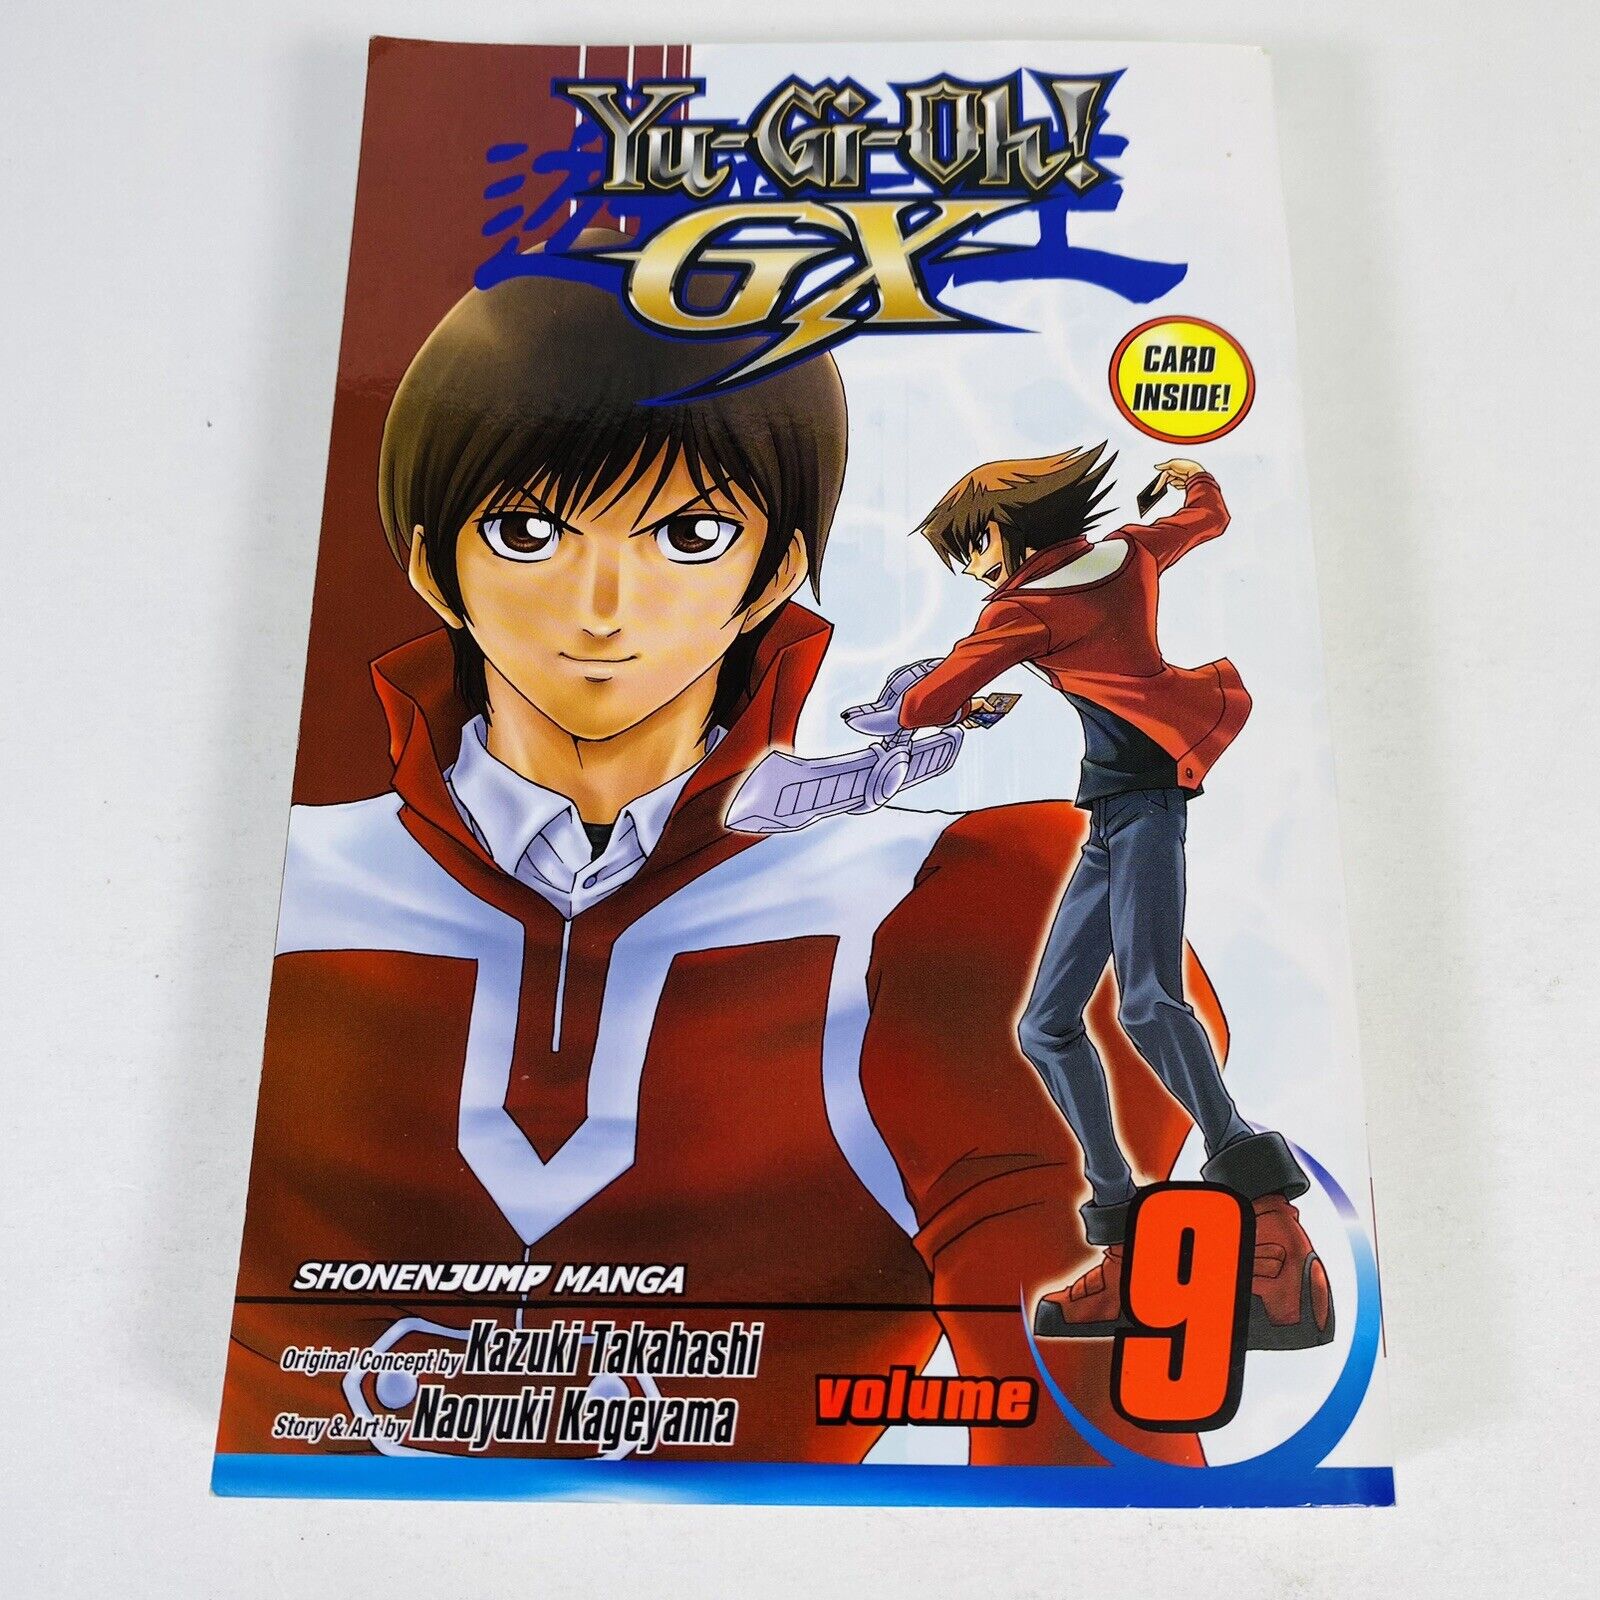 Yu-Gi-Oh GX Vol. 9 English Manga Takahashi First Printing No Card Shonen Jump